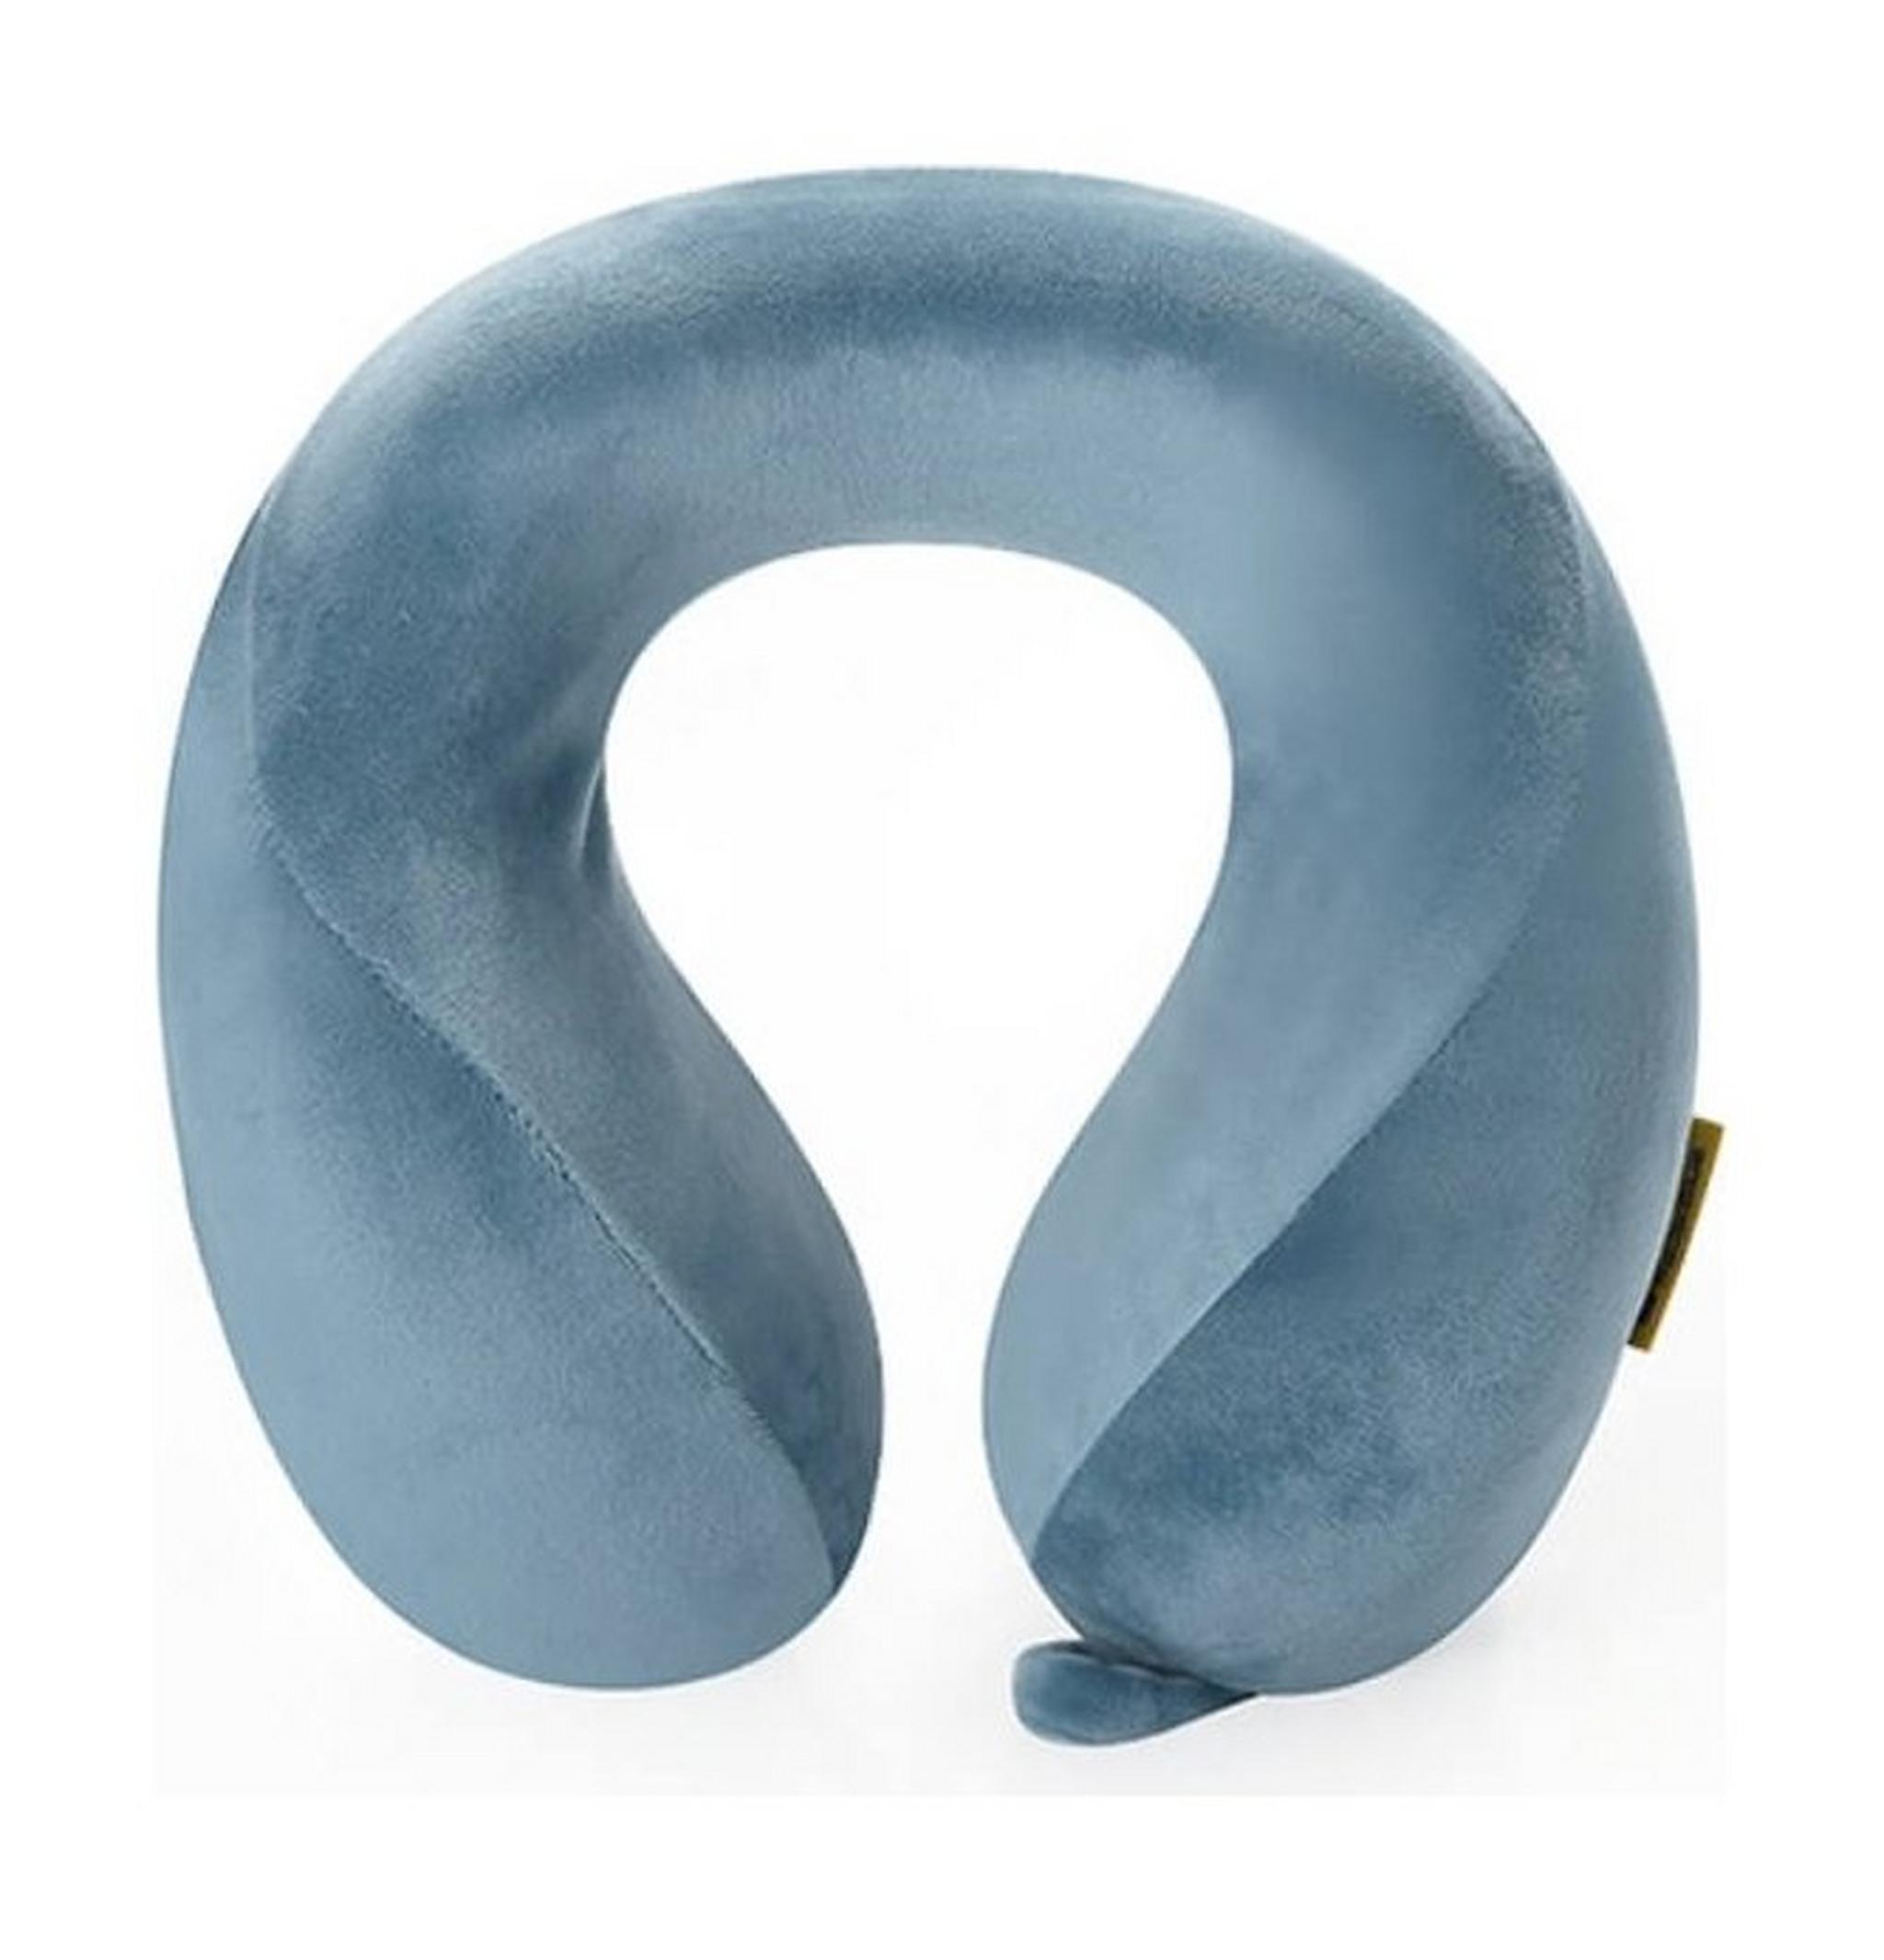 Travel Blue Neck Pillow (36/212) - Blue